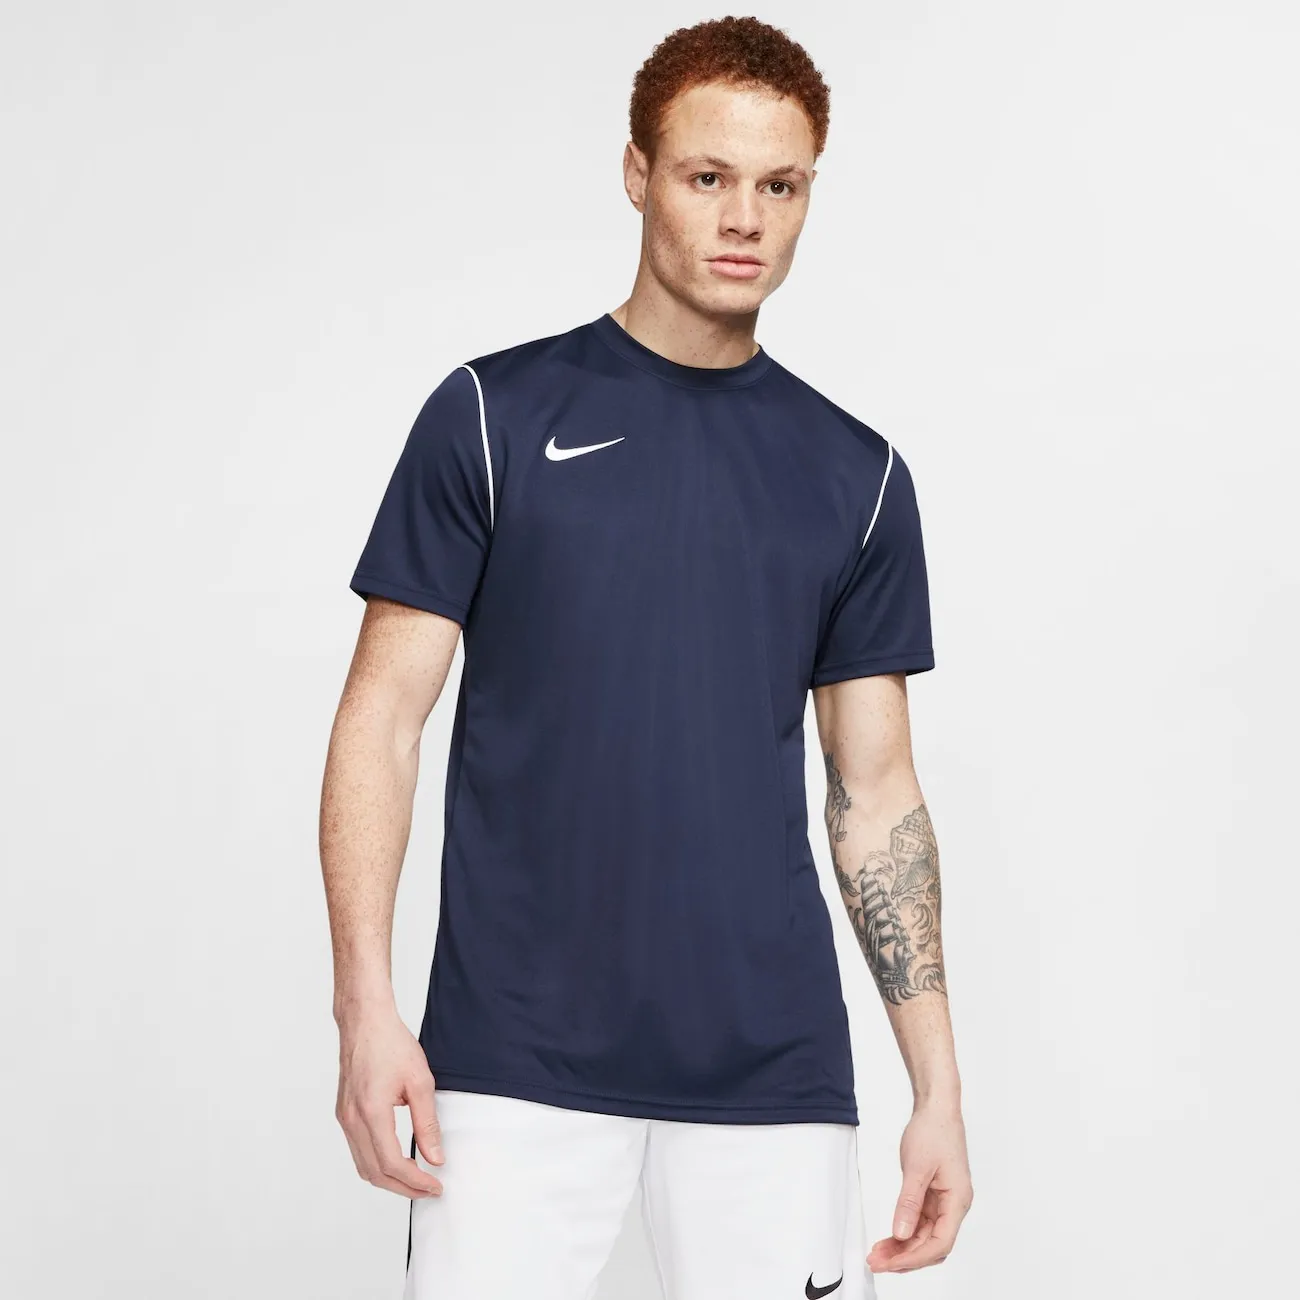 (pix) Camisa Nike Dri-fit Uniformes